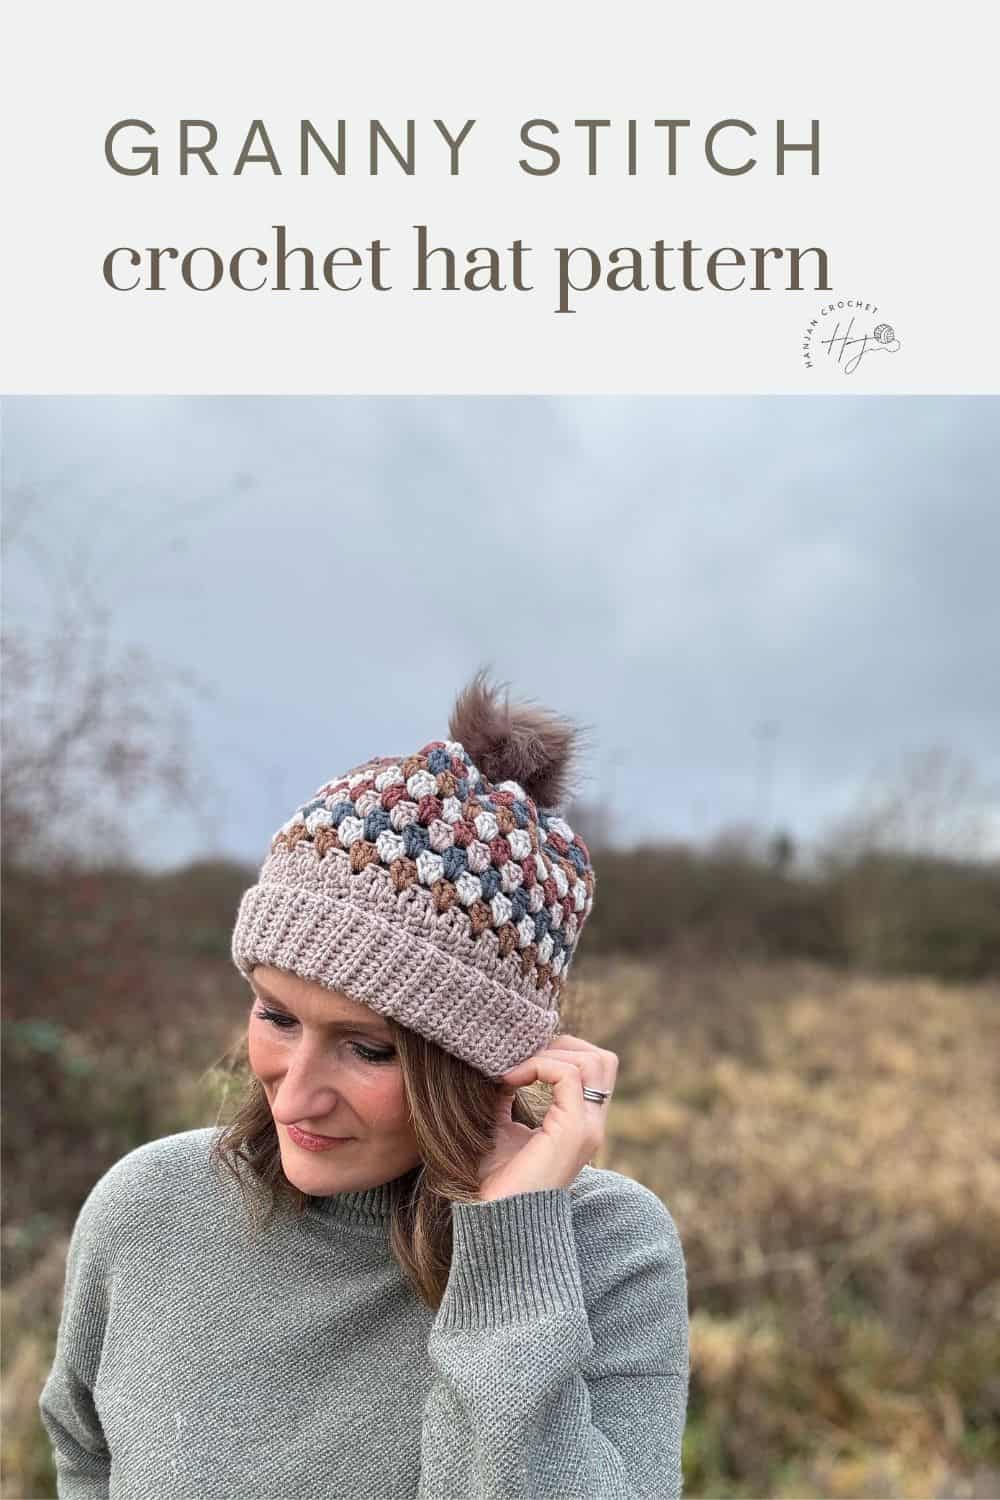 Granny stitch crochet hat pattern.